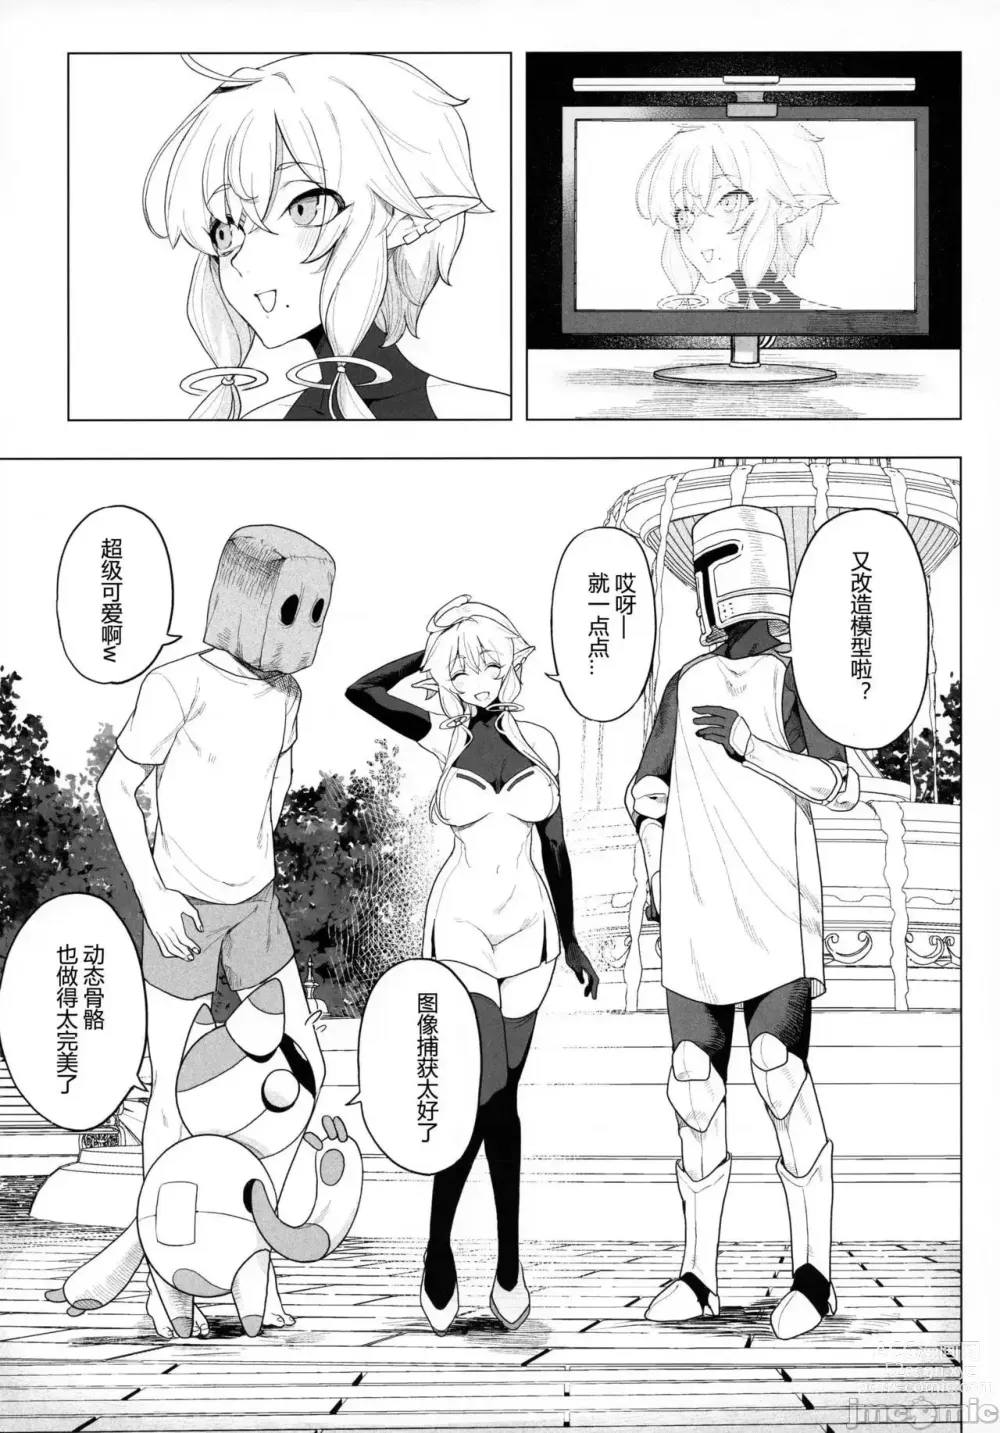 Page 5 of doujinshi 電脳姦姫 仮想空間で堕ちる少